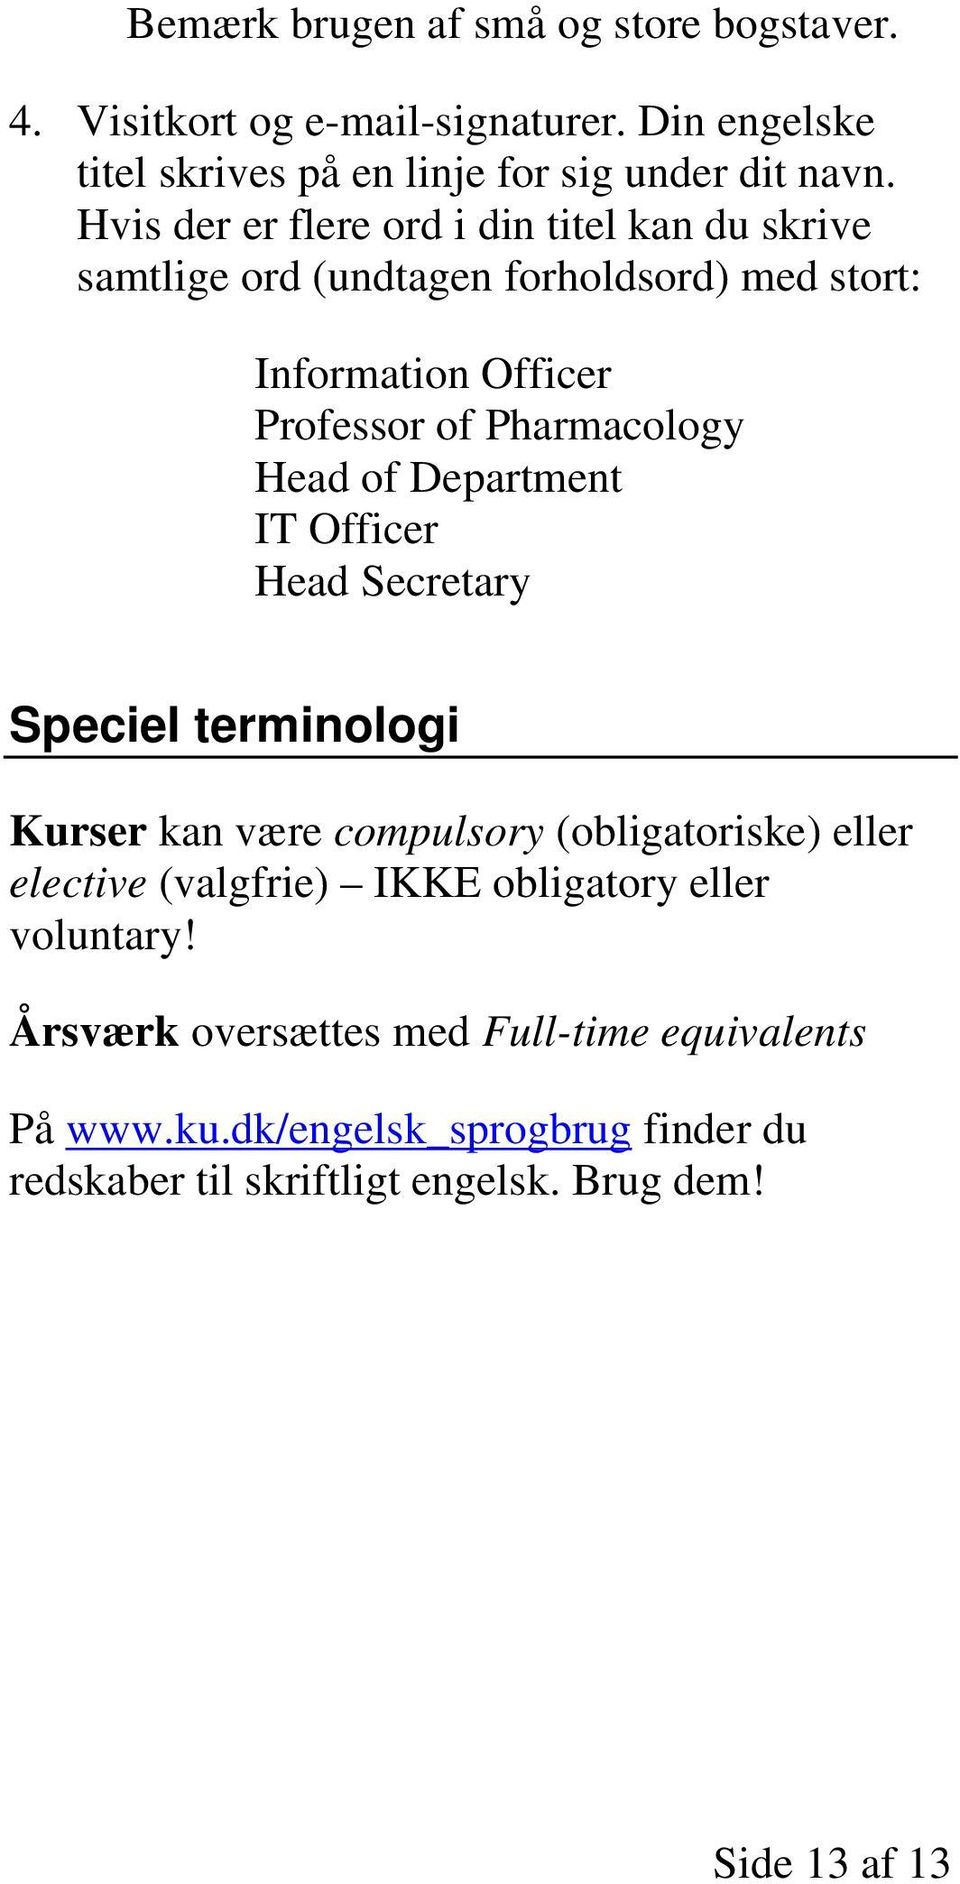 of Department IT Officer Head Secretary Speciel terminologi Kurser kan være compulsory (obligatoriske) eller elective (valgfrie) IKKE obligatory